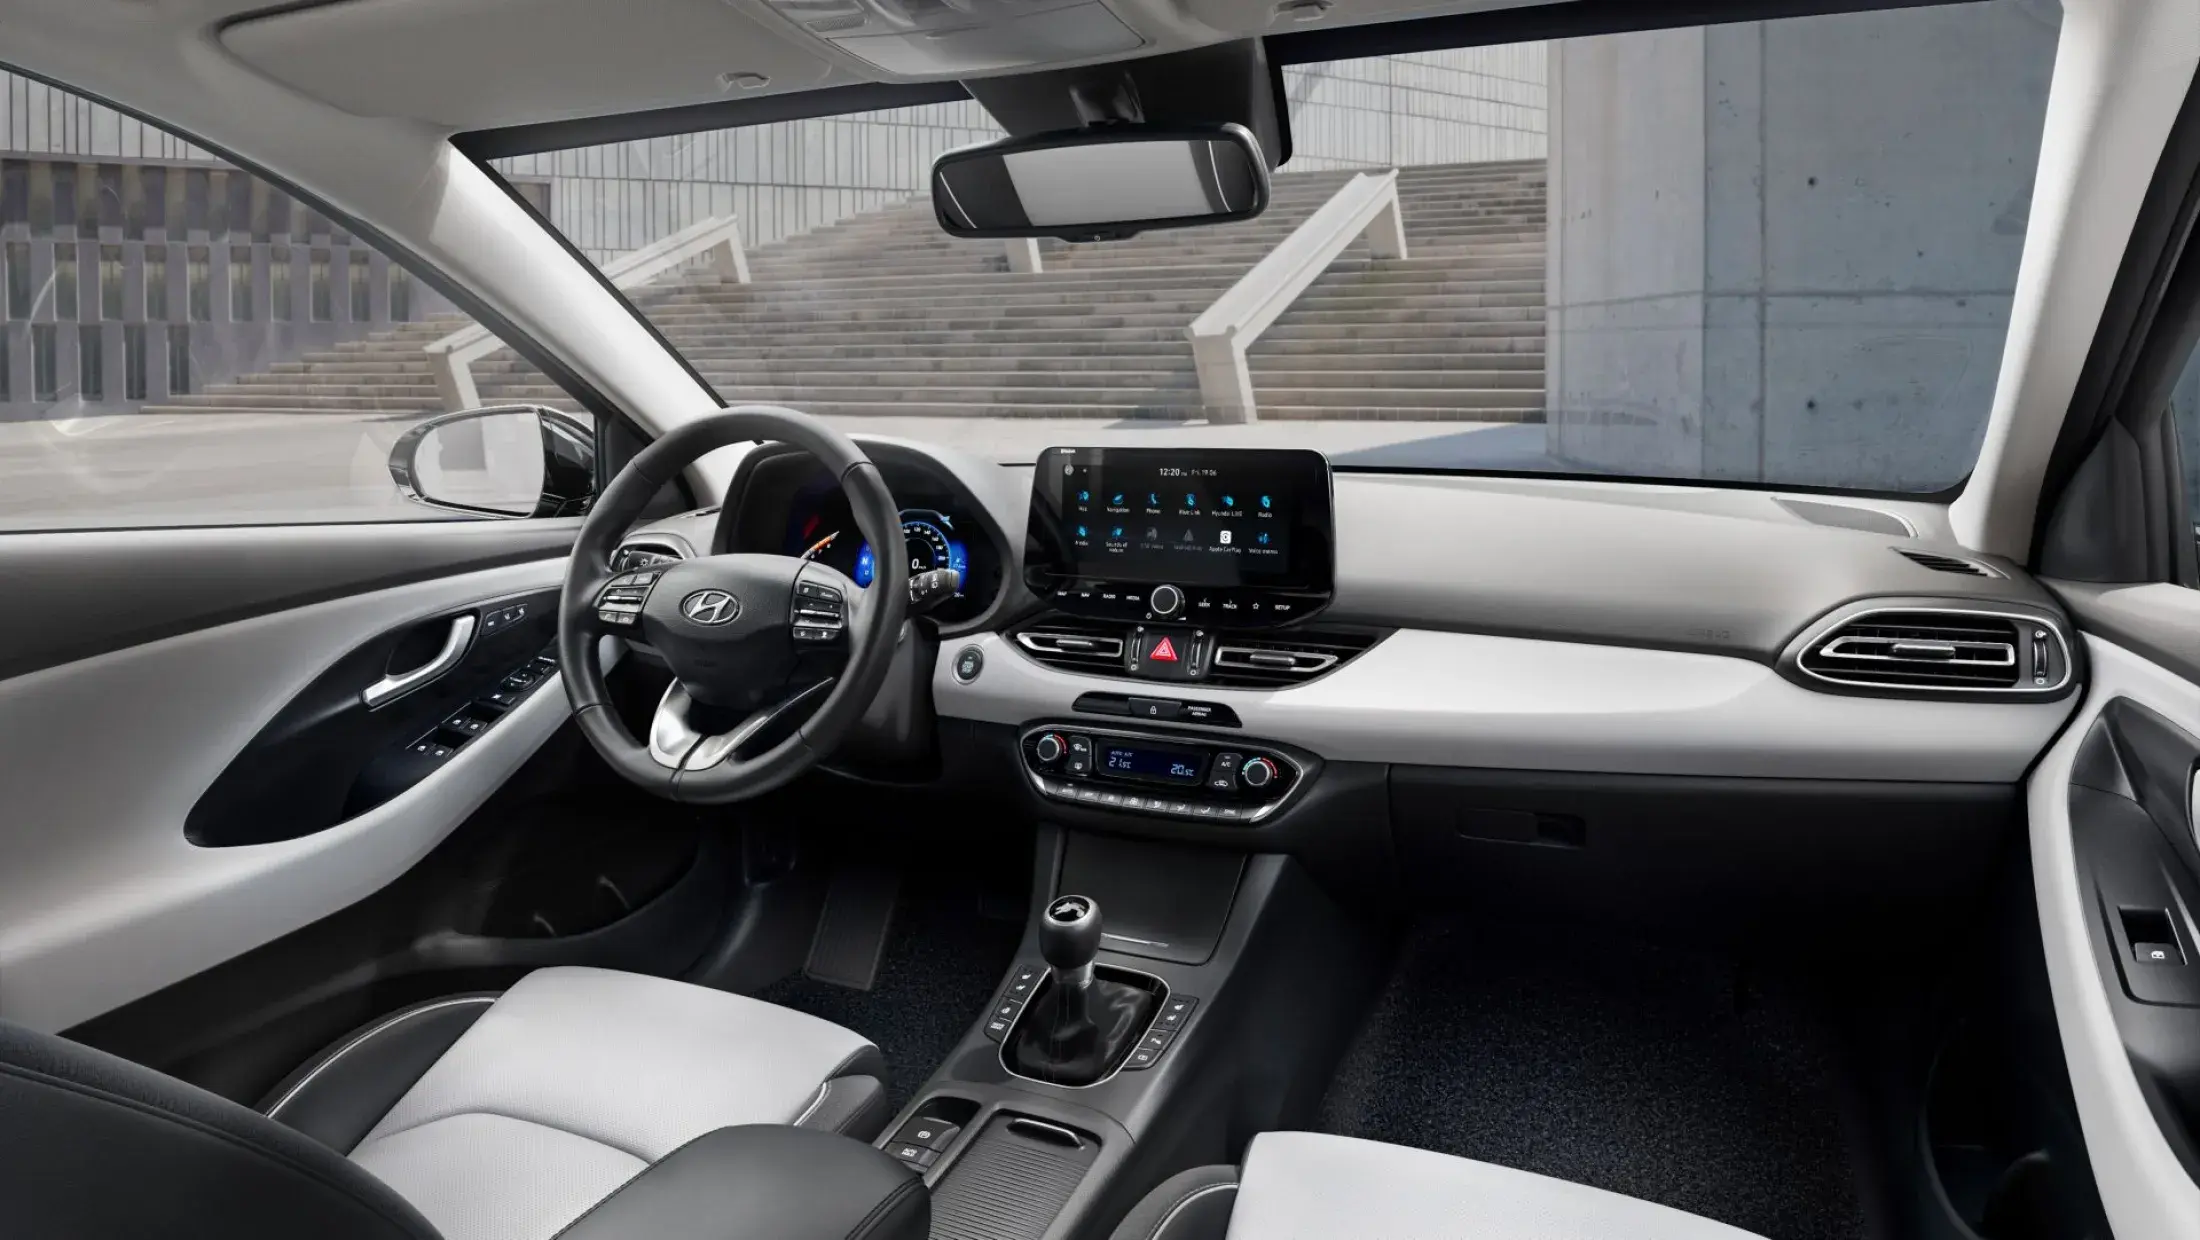 Hyundai i30 interior